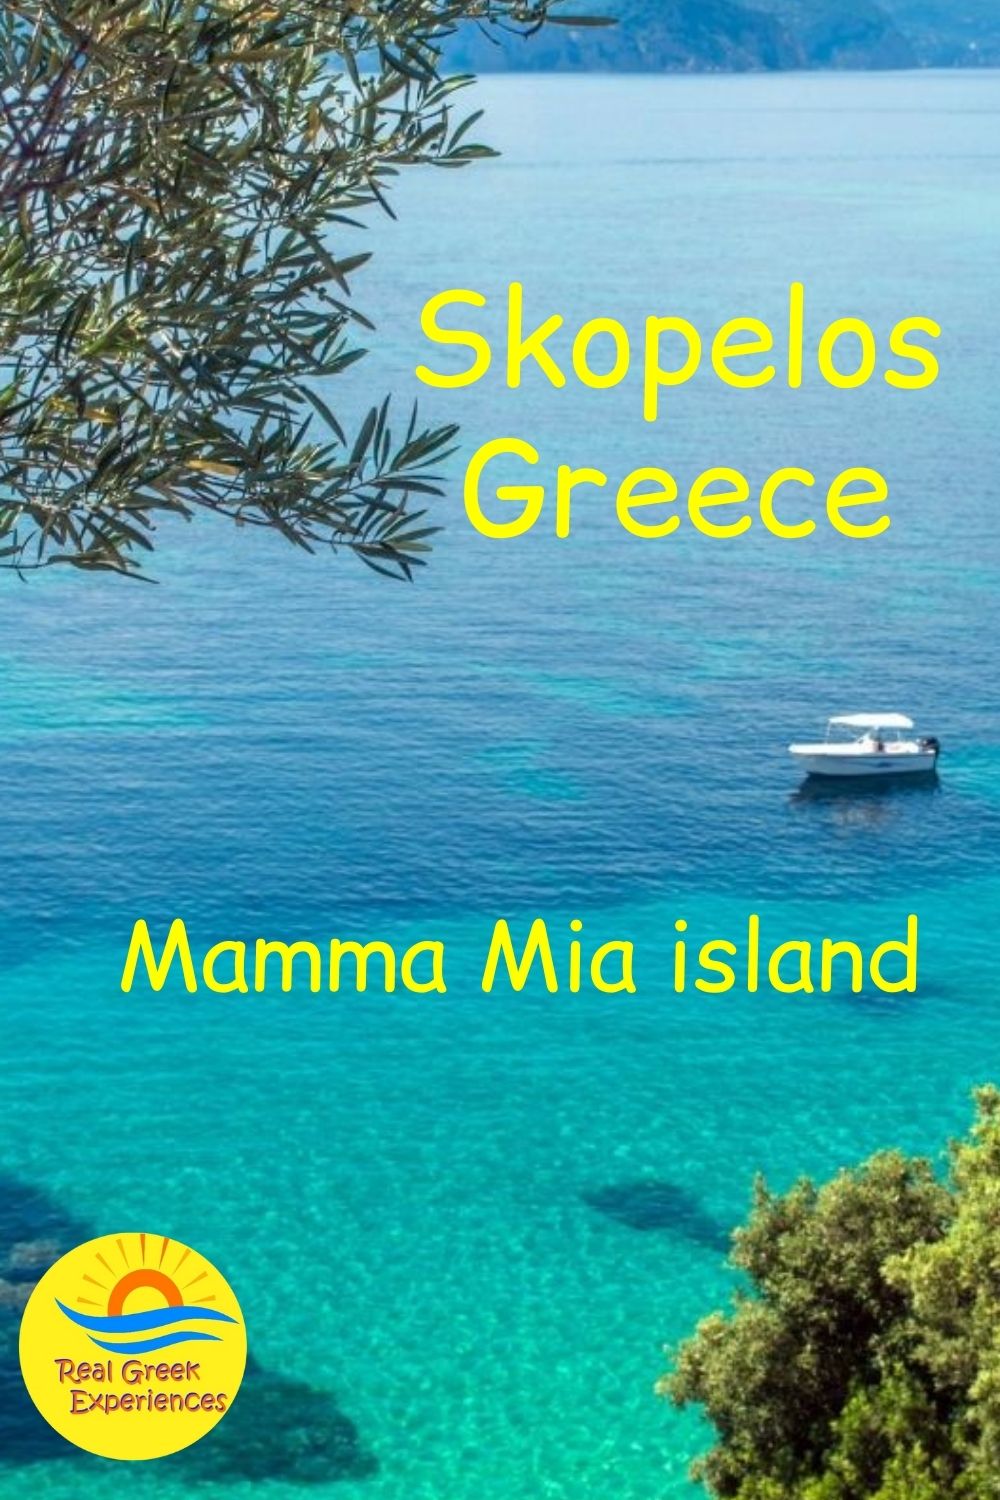 Mamma Mia island Skopelos Greece